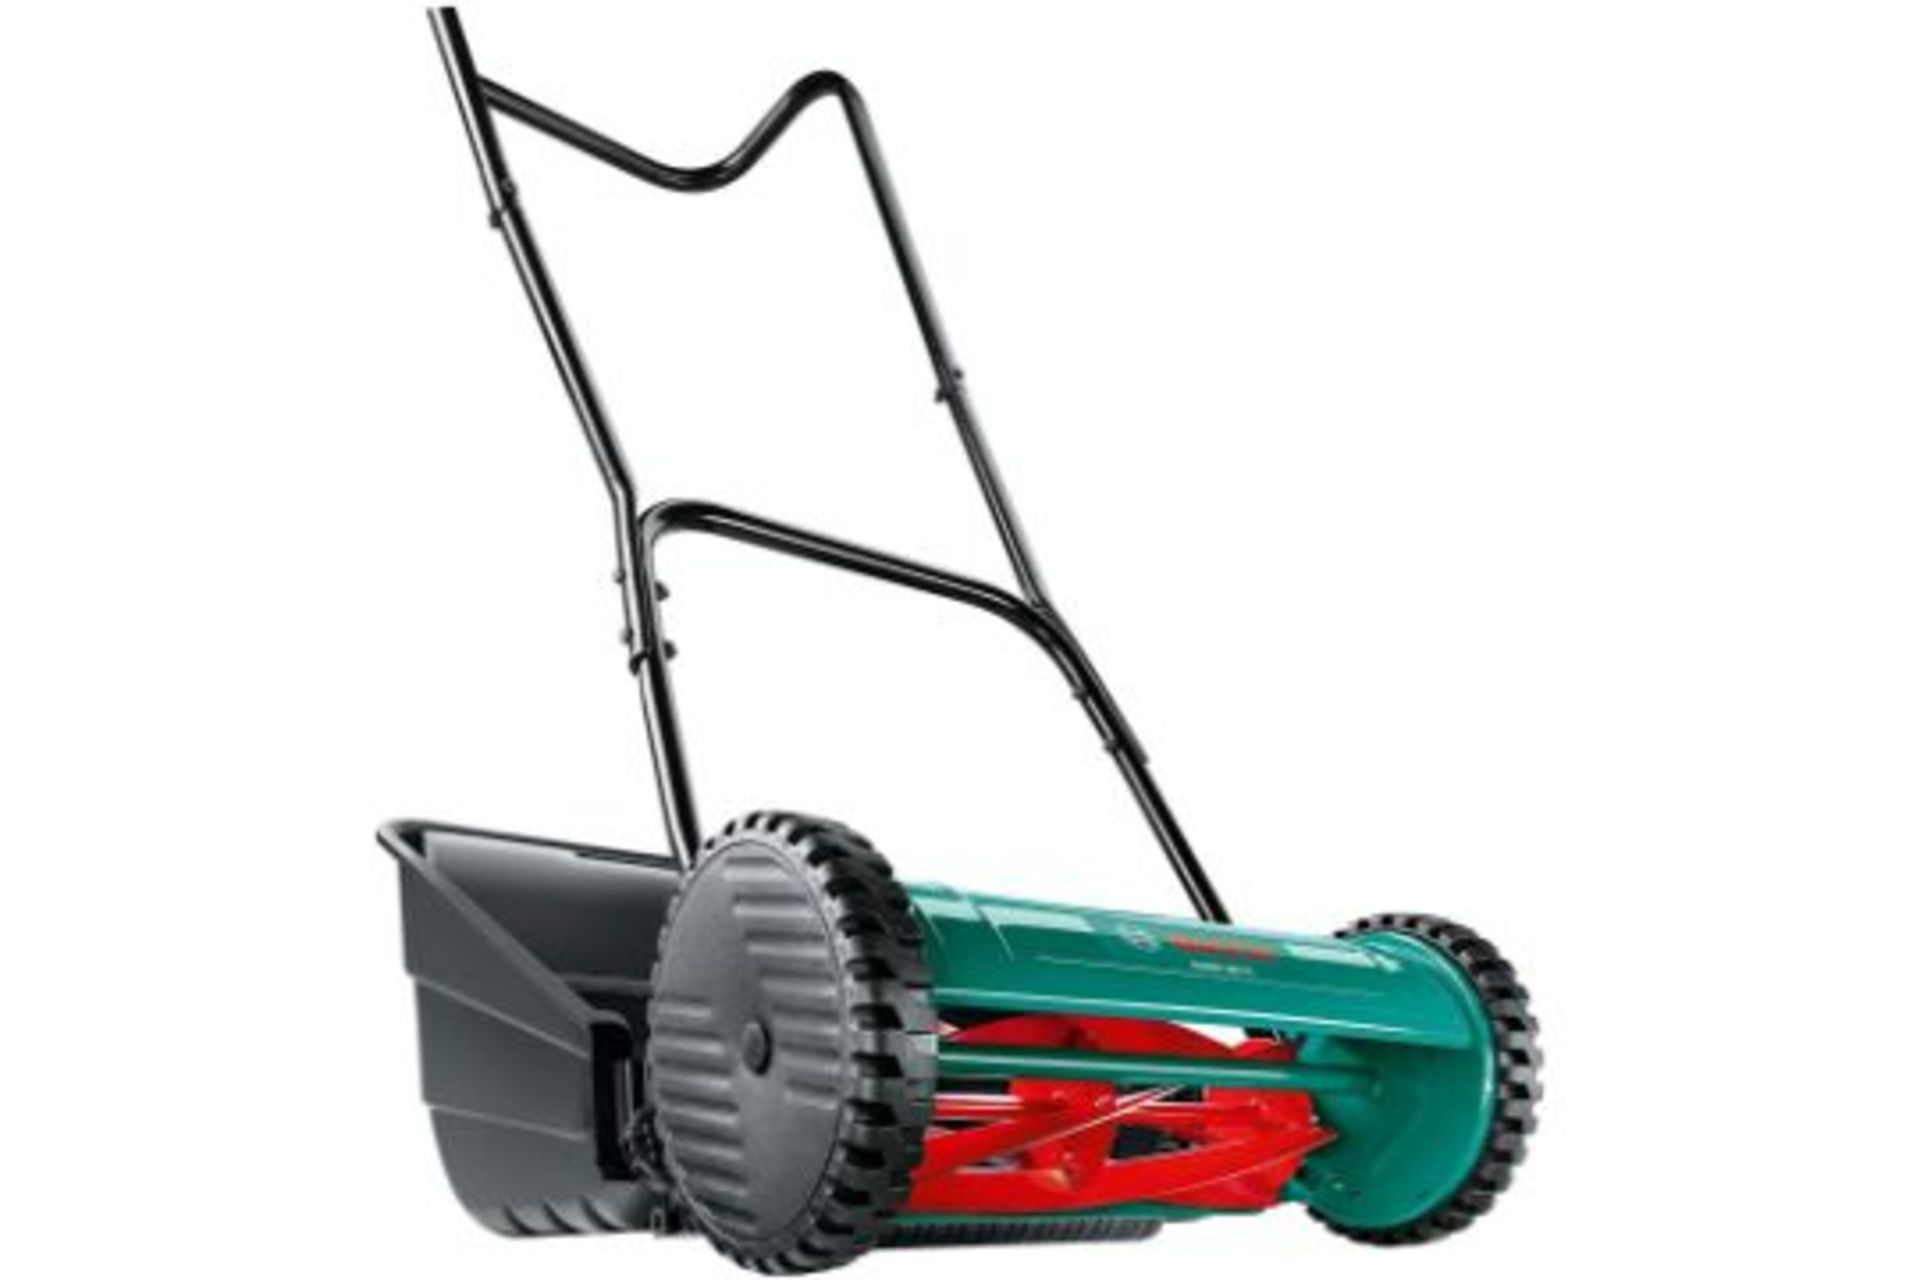 RRP - £59.99 Bosch AHM 38 G Manual Garden Lawn Mower (Cutting Width 38 cm, in Carton Packaging)